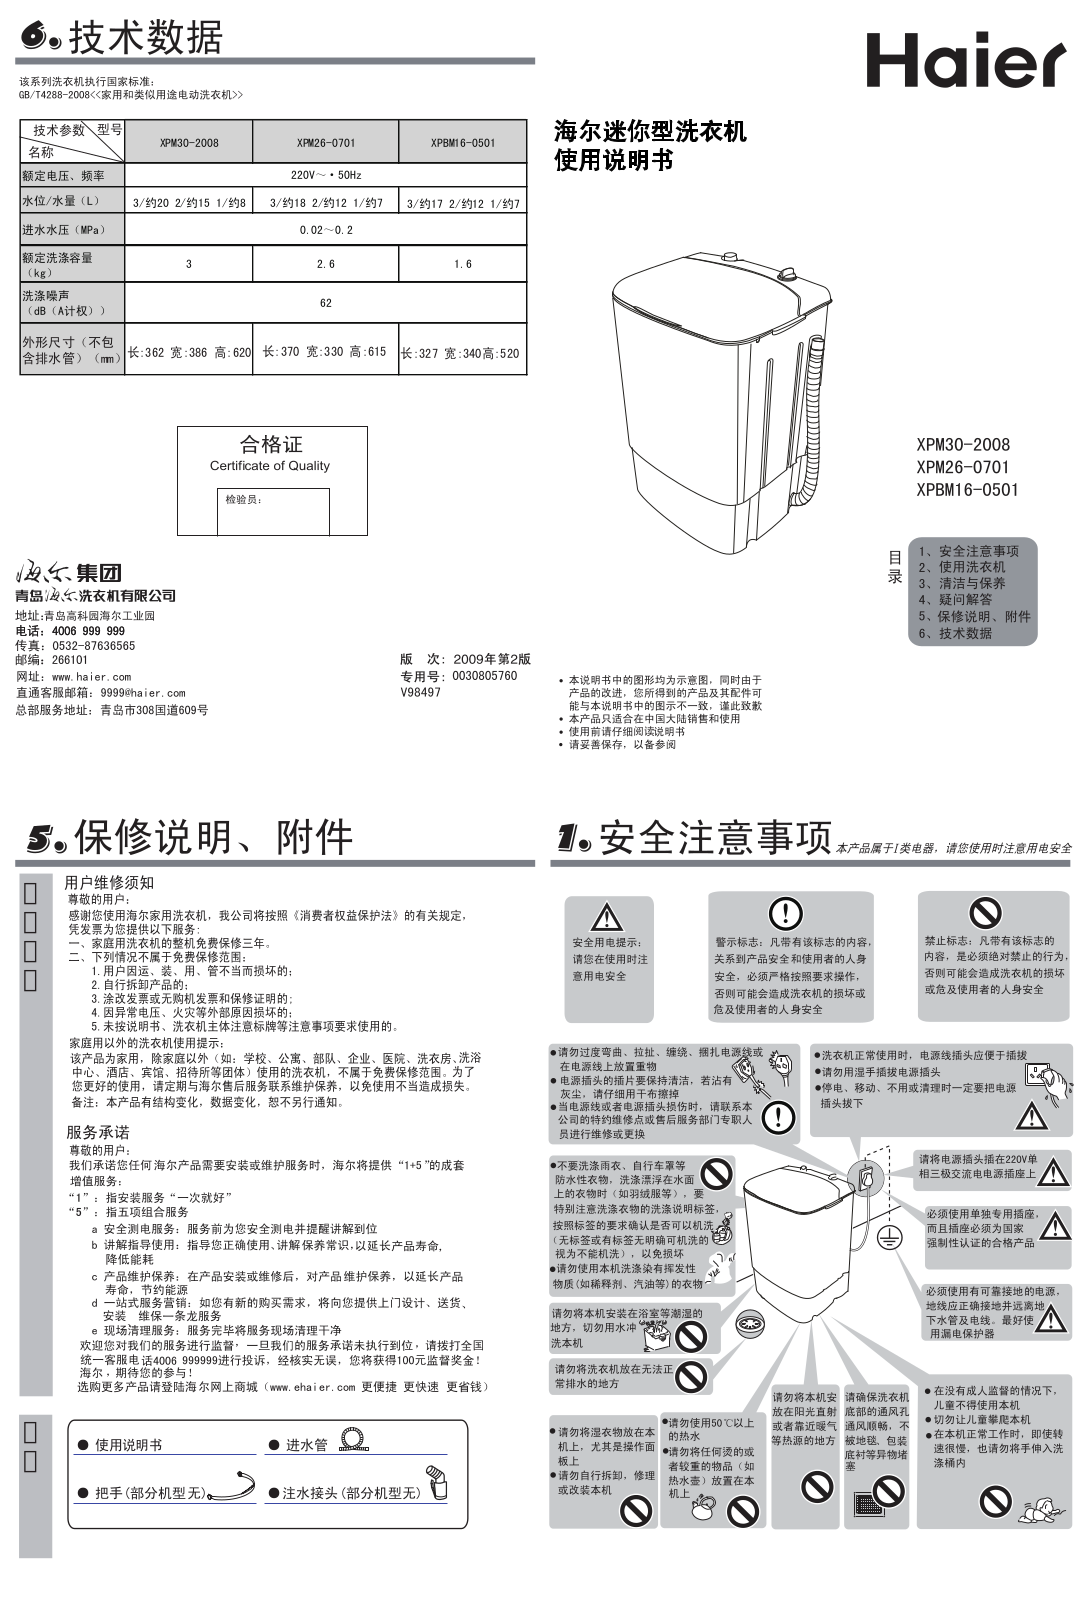 Haier XPM30-2008, XPM26-0701, XPBM16-0501 User Manual